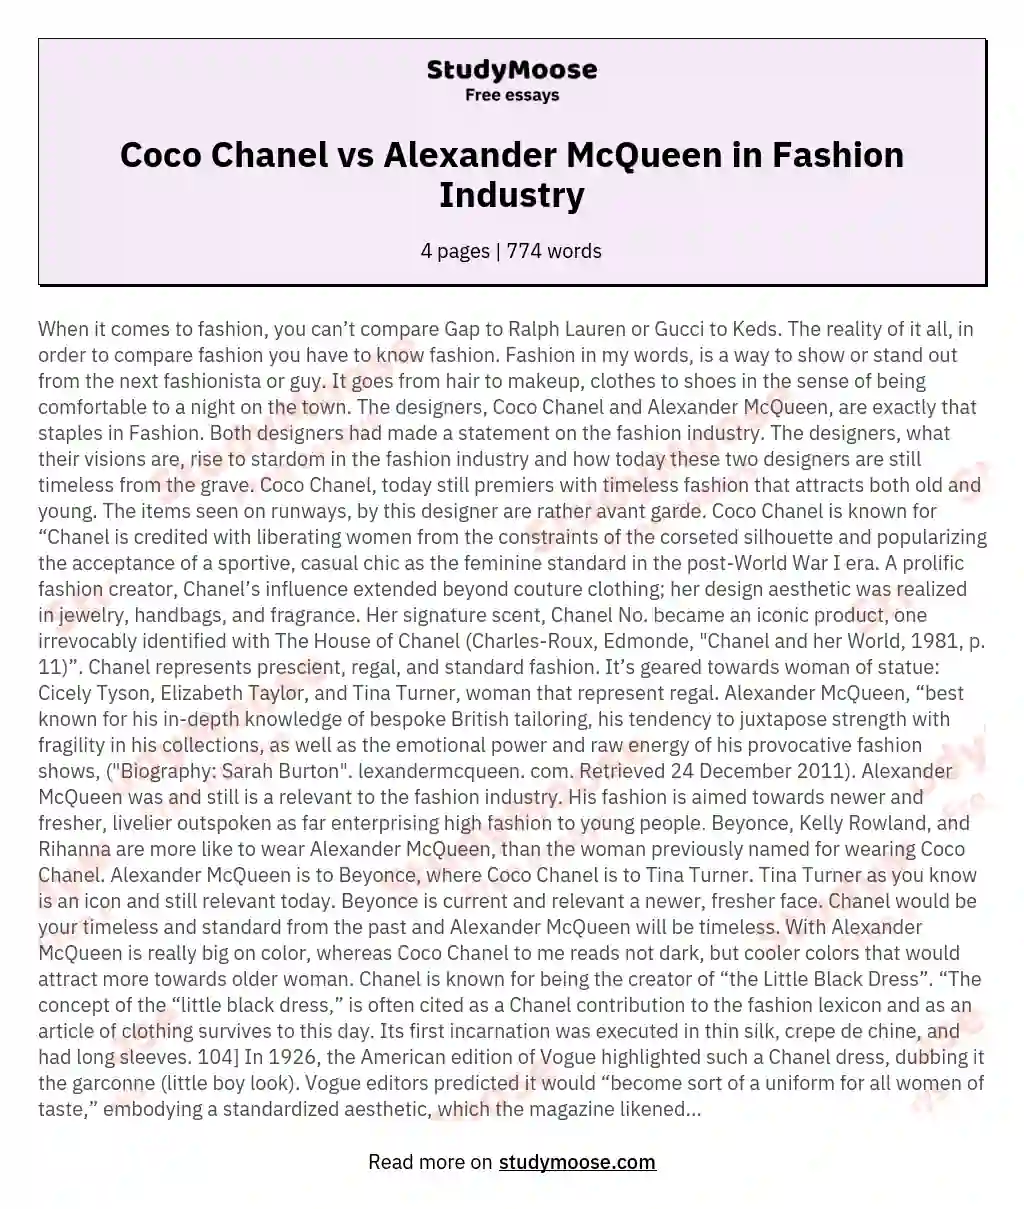 Coco Chanel vs Alexander McQueen in Fashion Industry